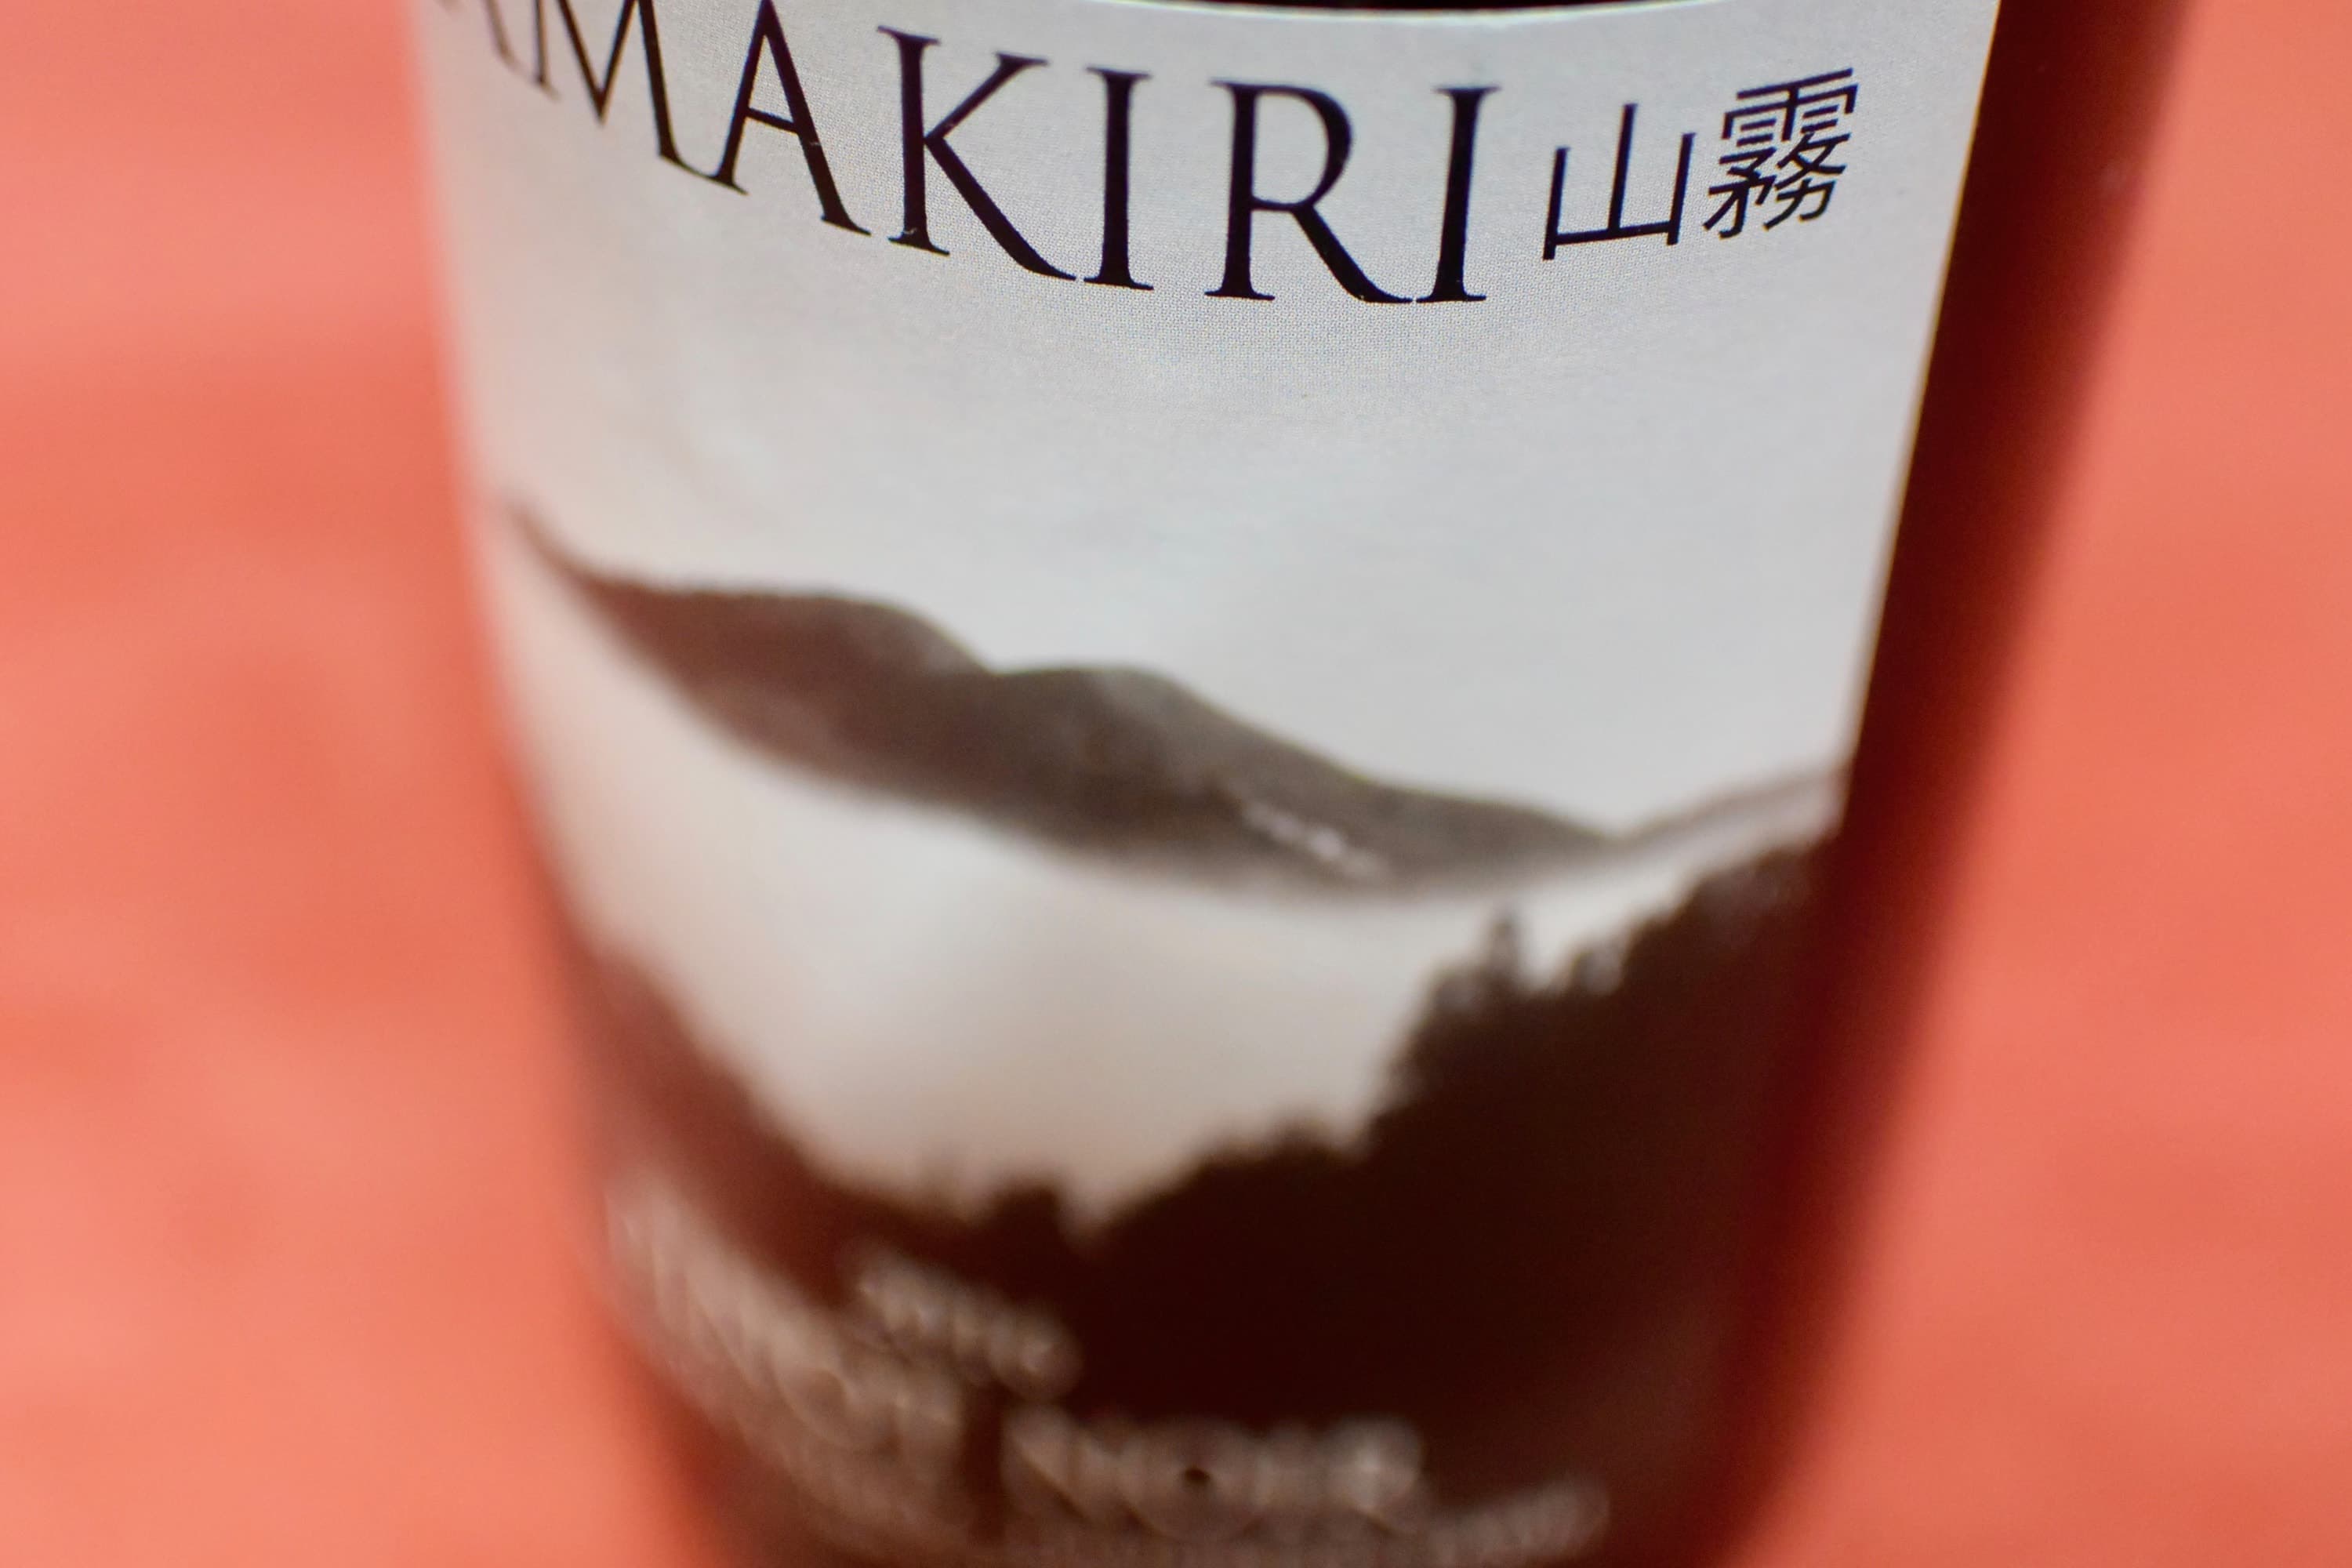 Yamakiri Pinot Noir Fligreen Farm 2016